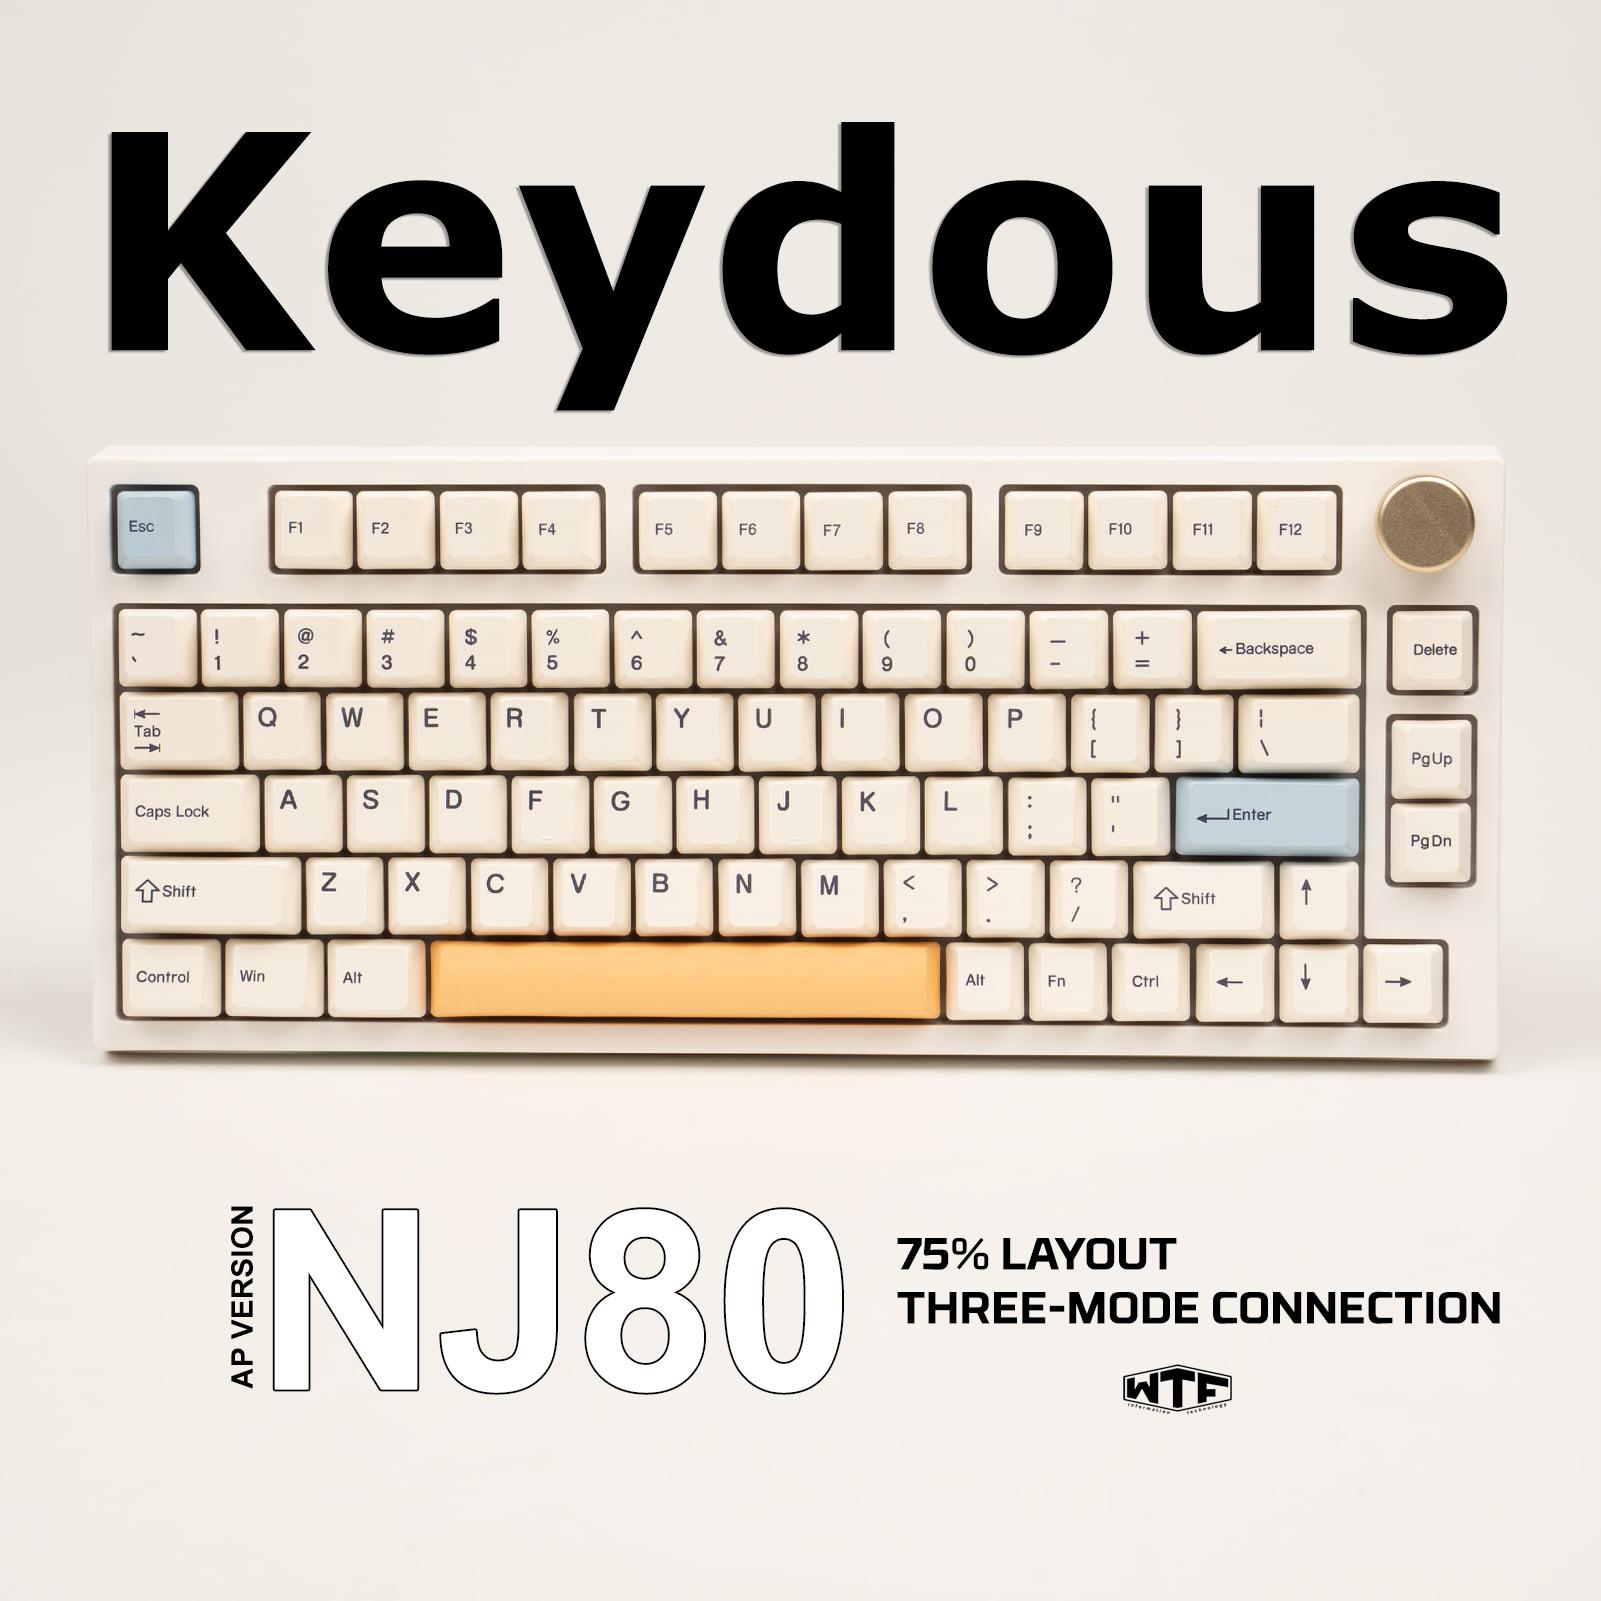 Mechanical Keyboard